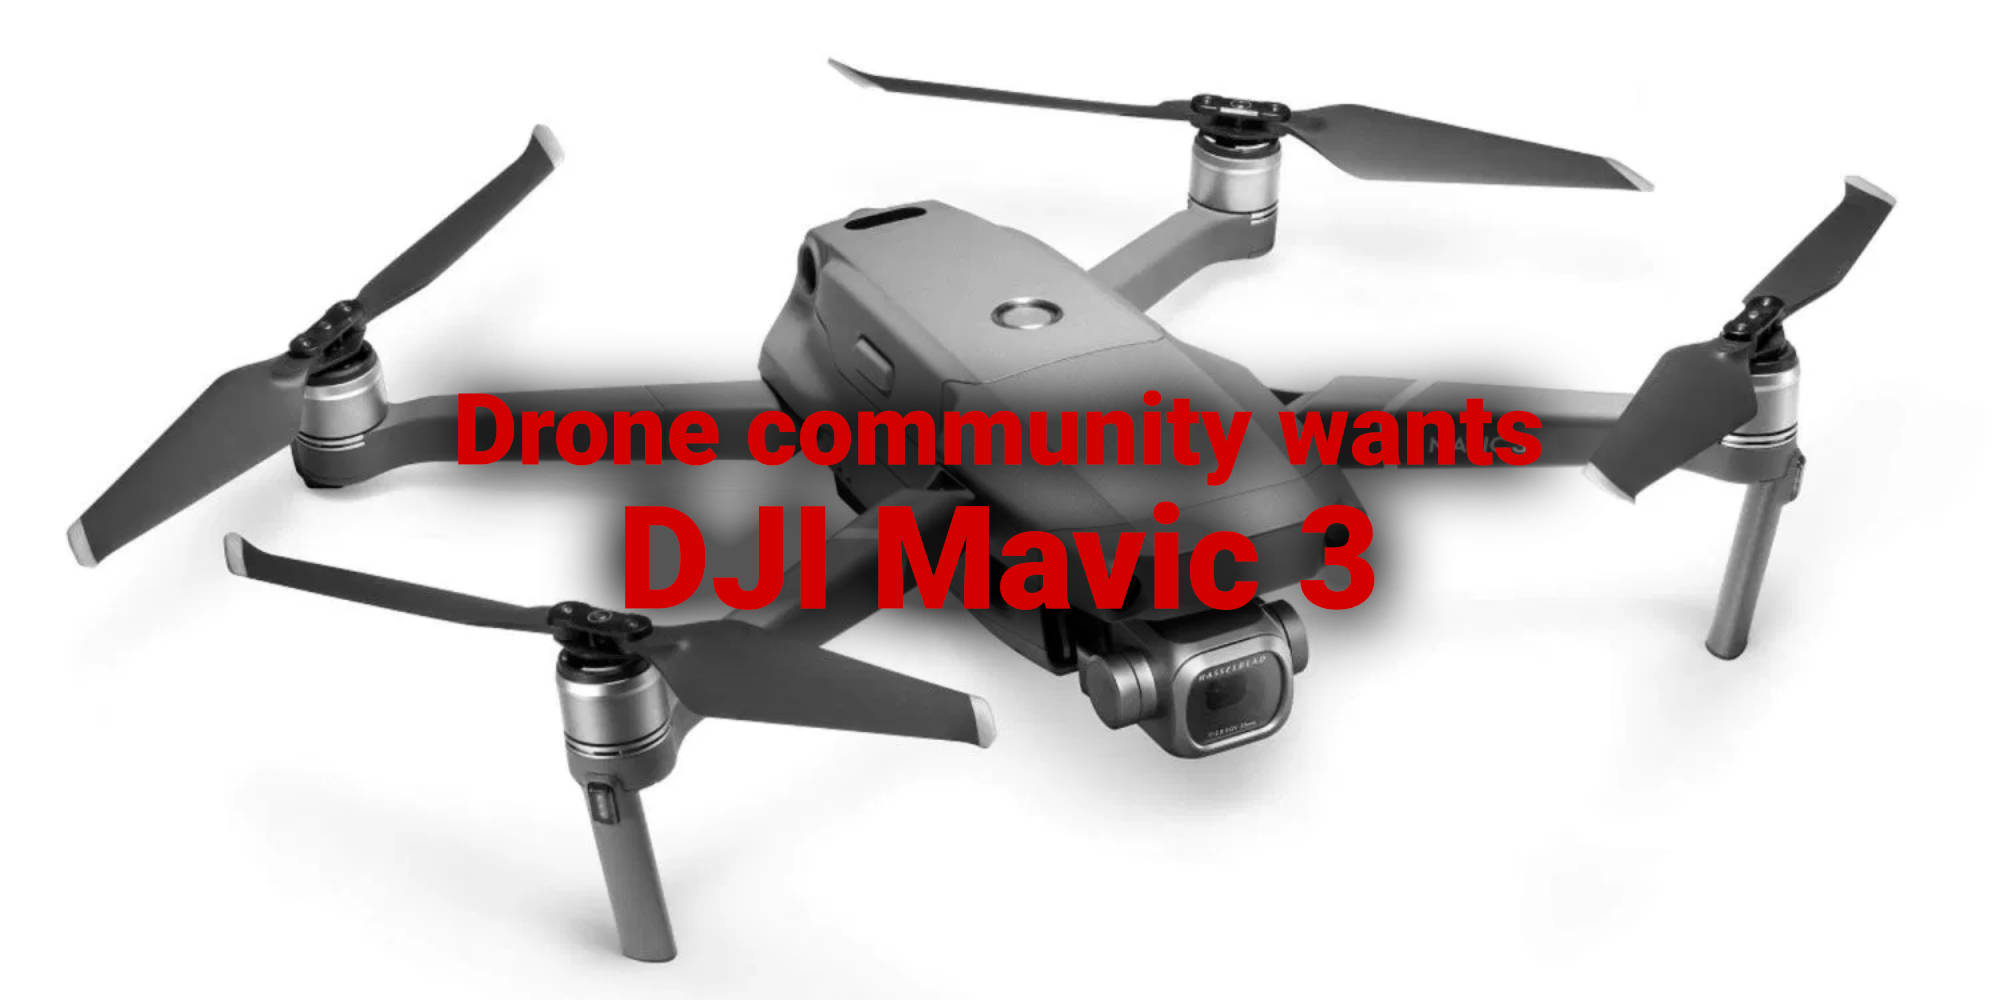 1000 dollar drone